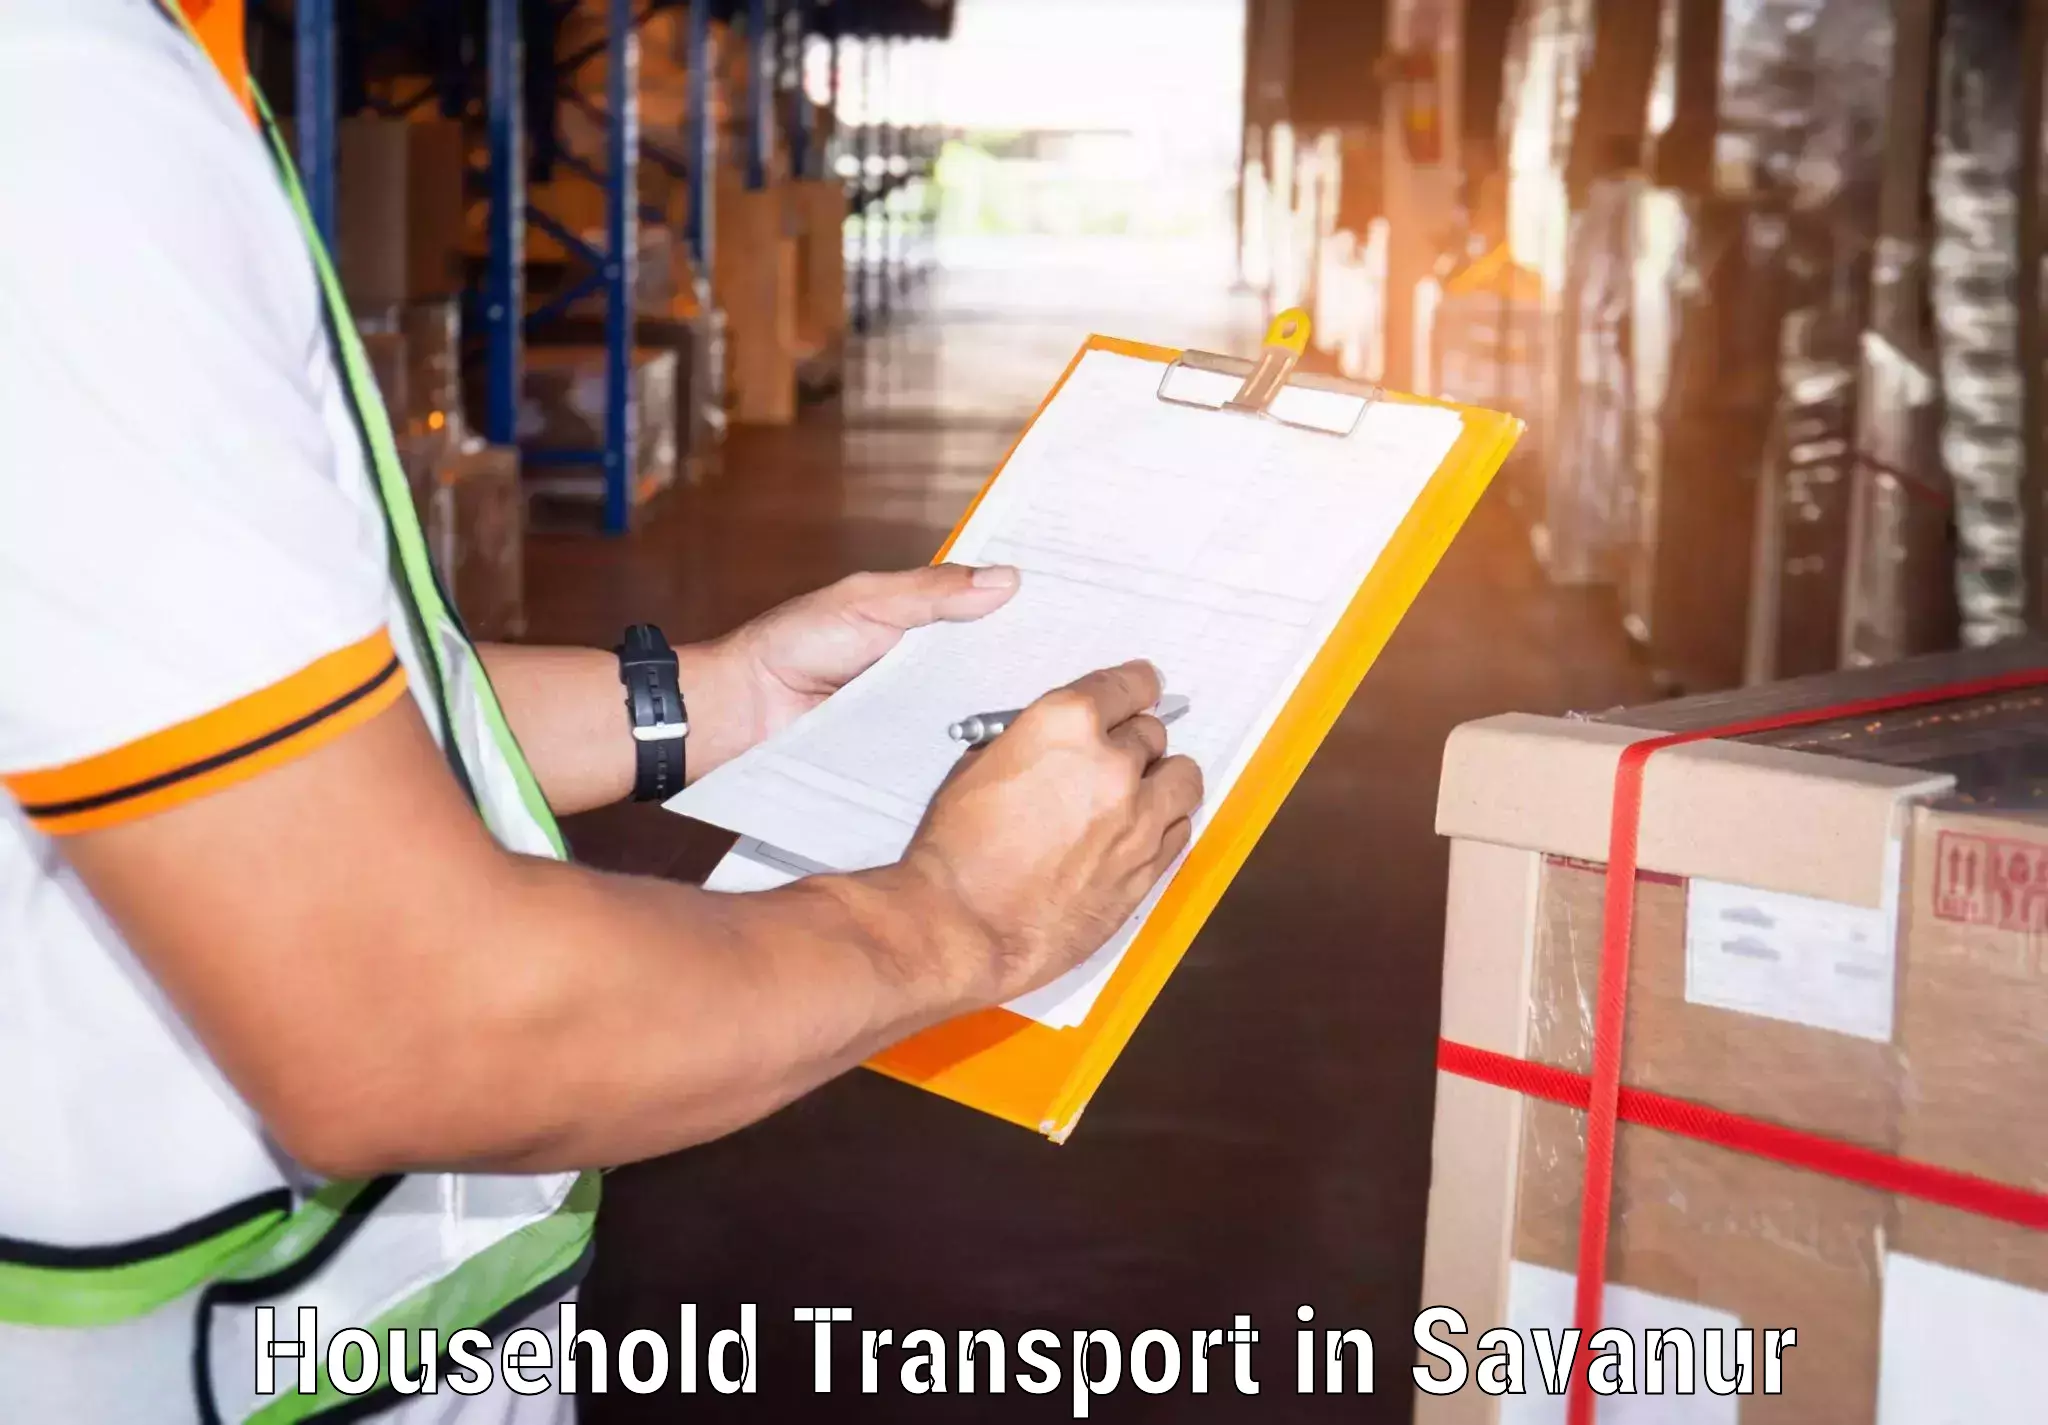 Household goods transport service in Savanur